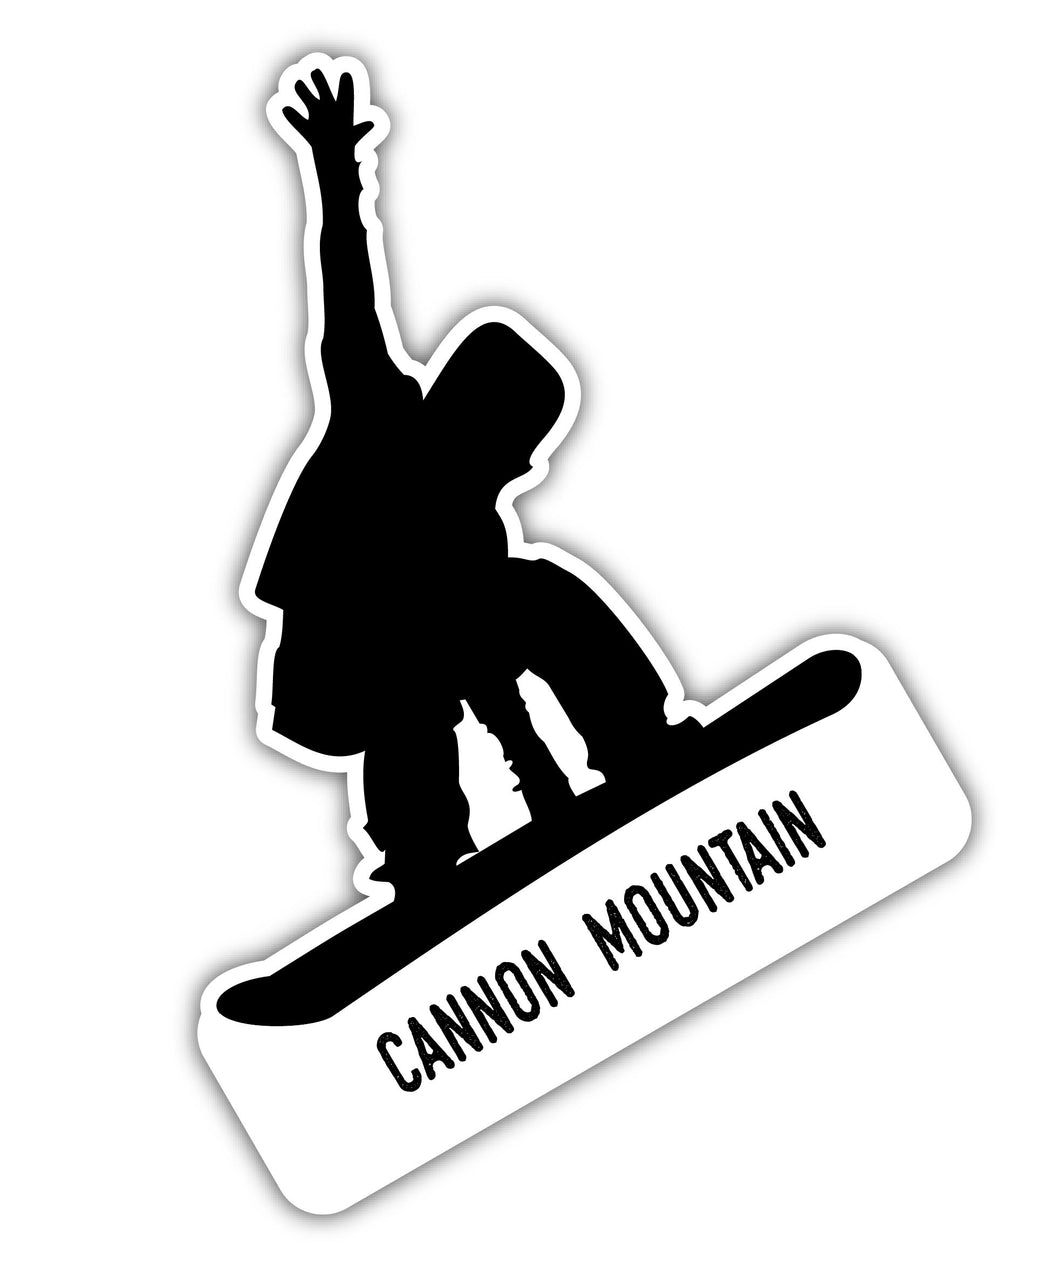 Cannon Mountain New Hampshire Ski Adventures Souvenir Approximately 5 x 2.5-Inch Vinyl Decal Sticker Goggle Design